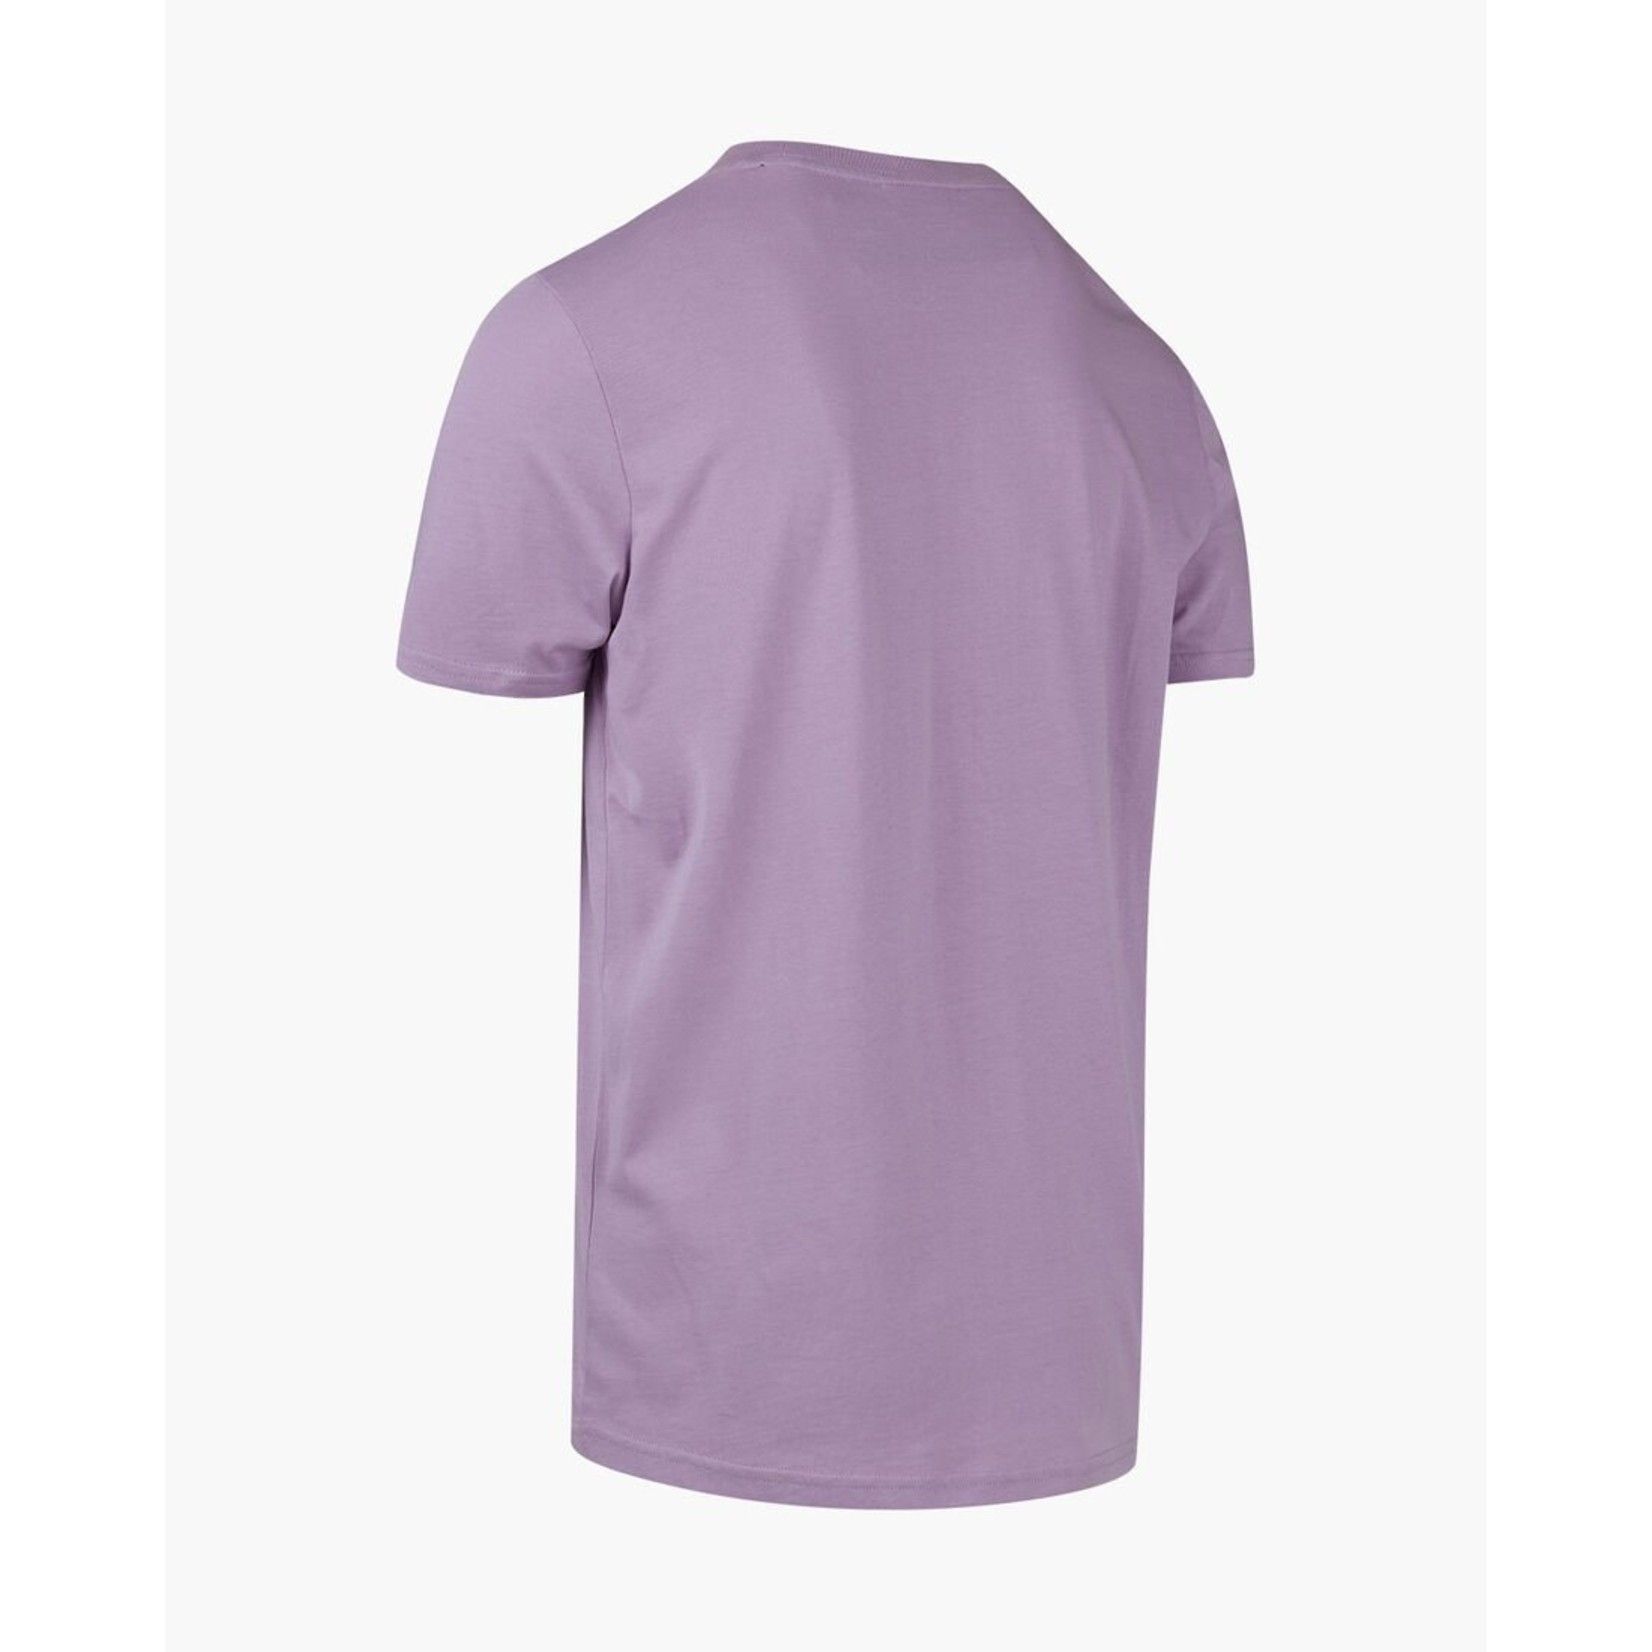 Cruyff Cruyff Ximo Shirt purple